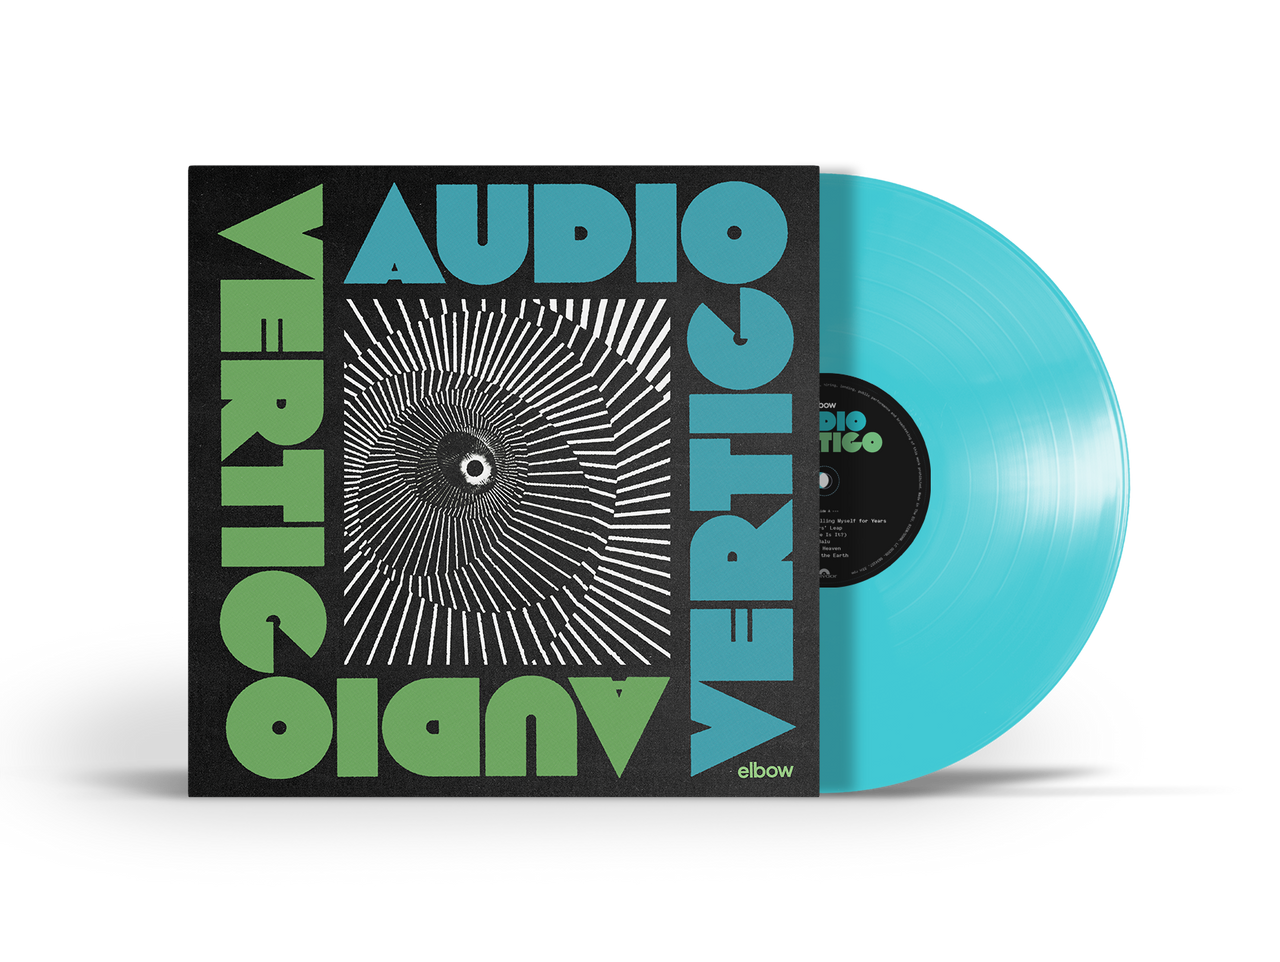 Transparent Blue vinyl with alternative artwork